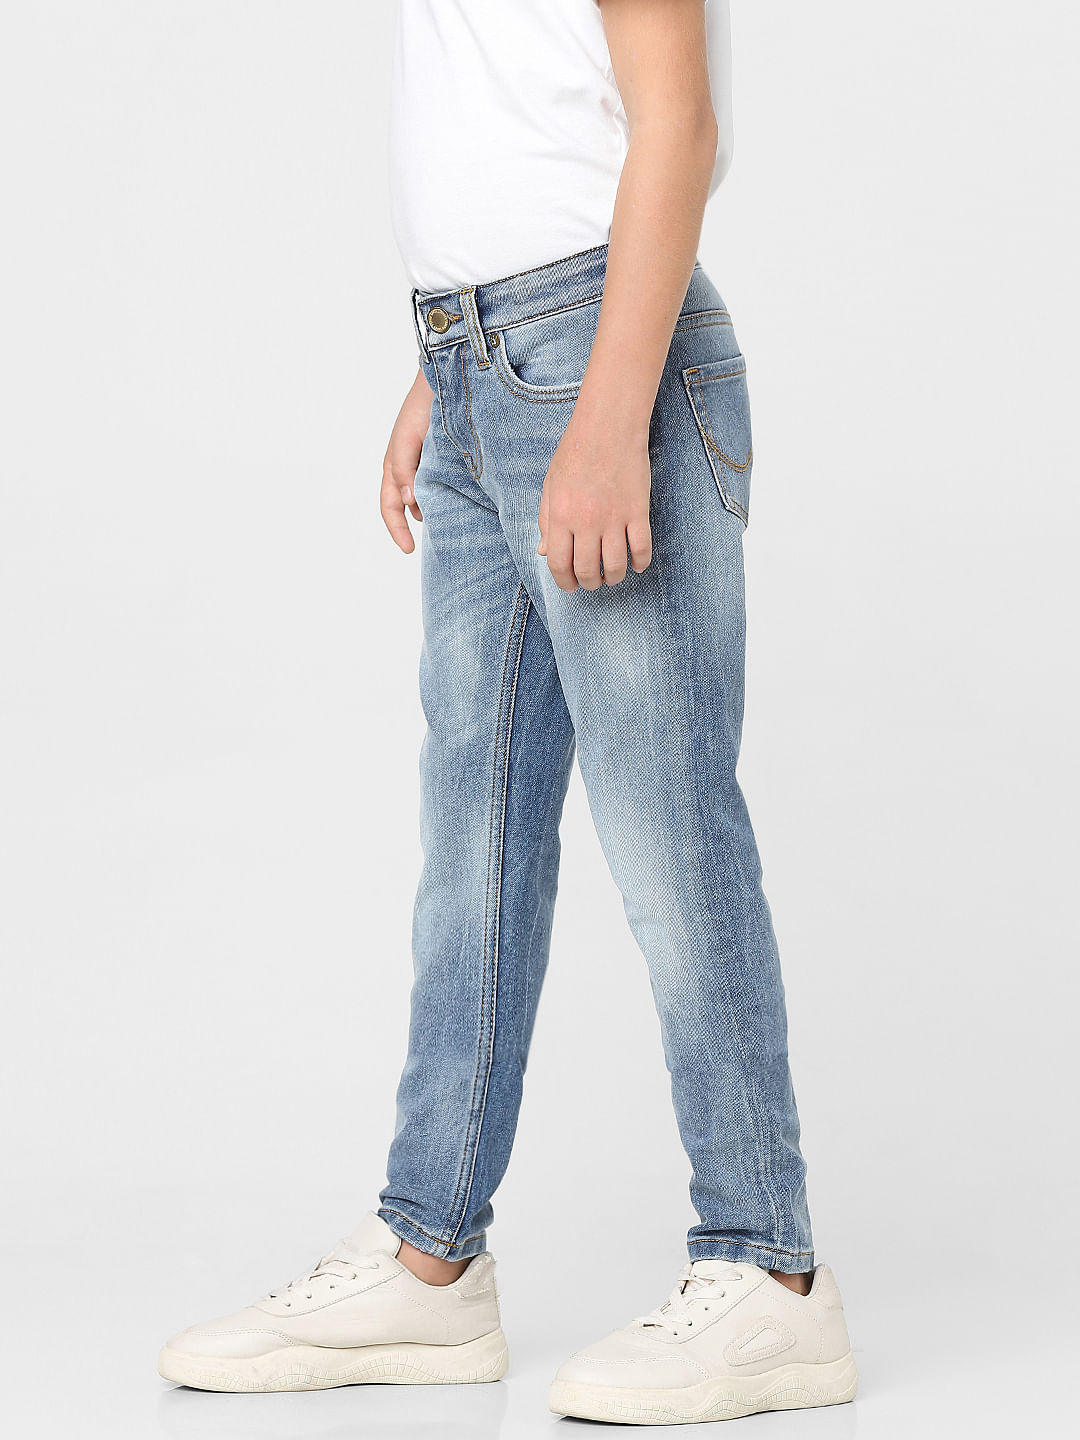 Skinny Jeans - Light denim blue - Men | H&M US